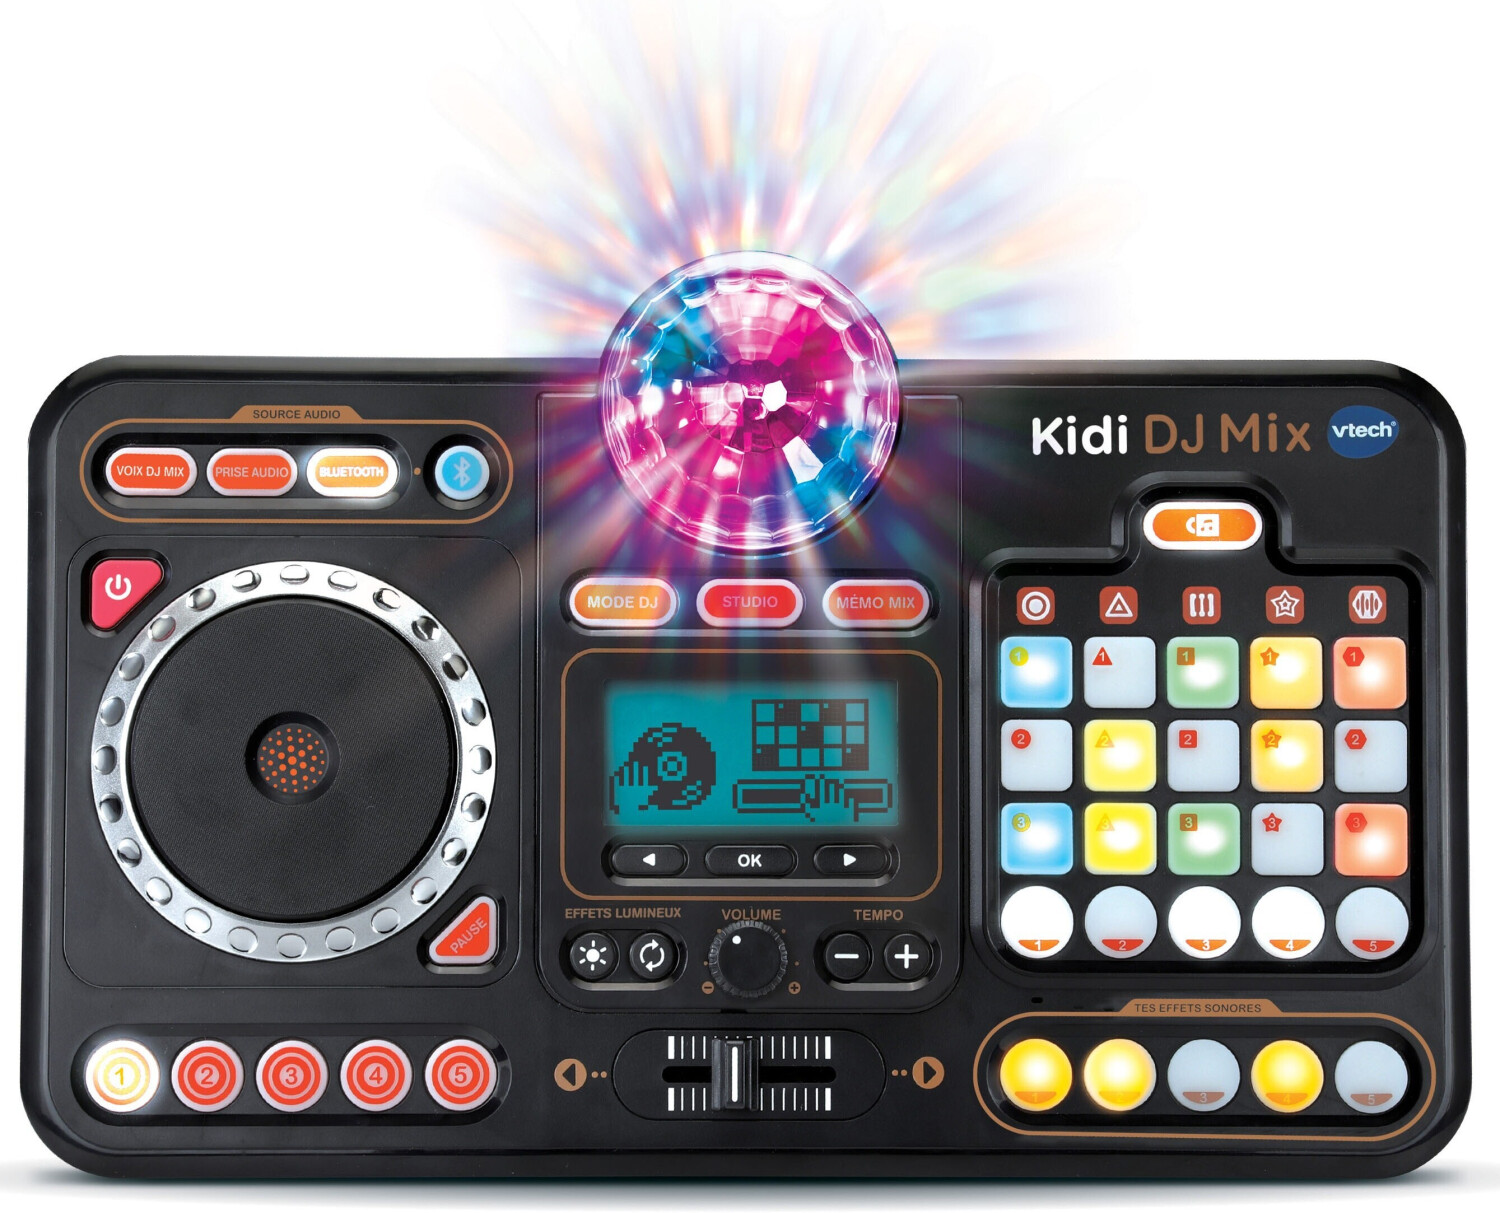 VTech Kidi DJ Mix (Black), Toy DJ Mixer for Kids India